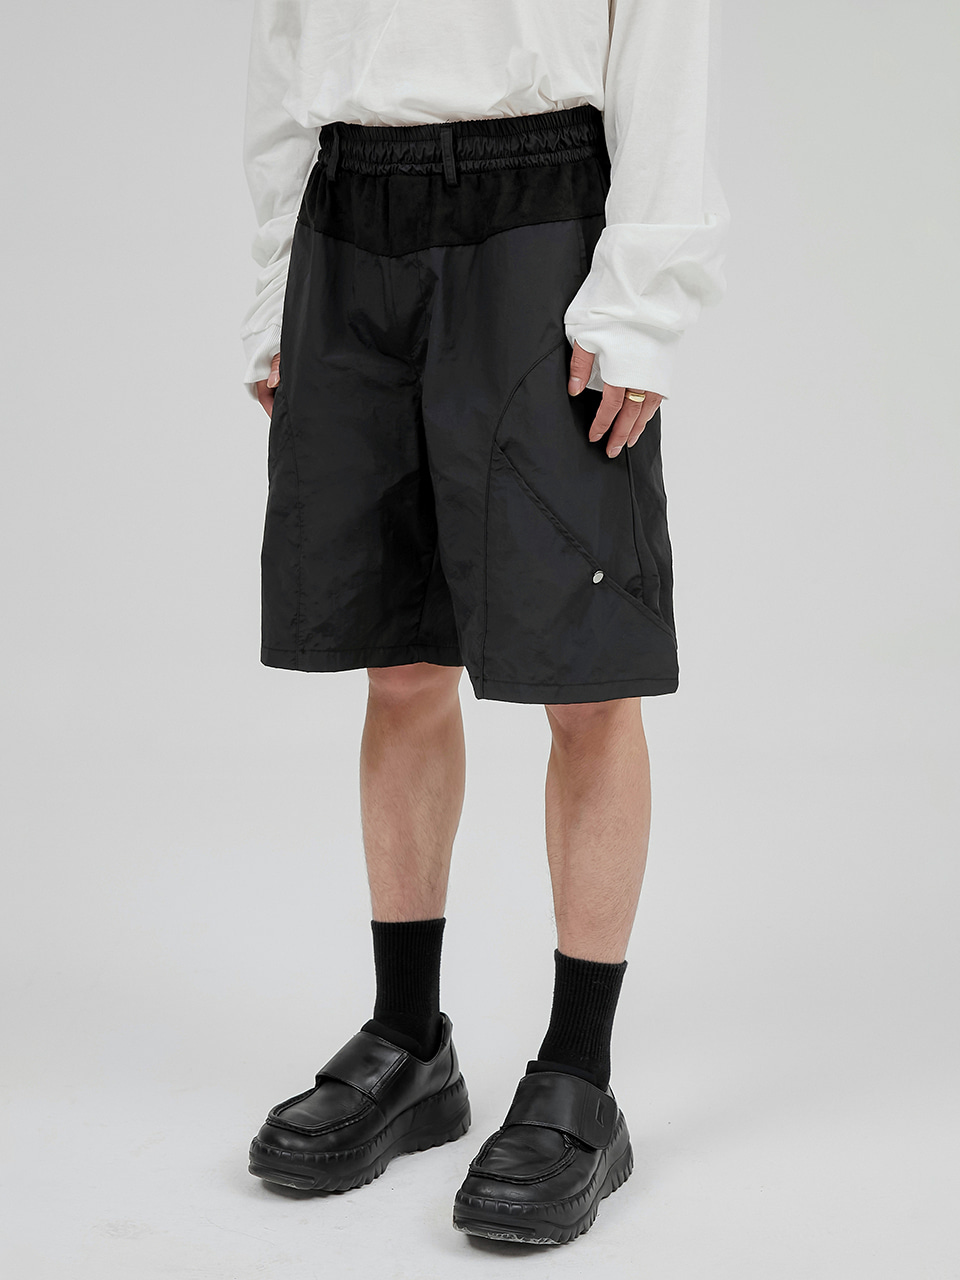 FLARE UP플레어업 Side Flap shorts - Black (FL-223)